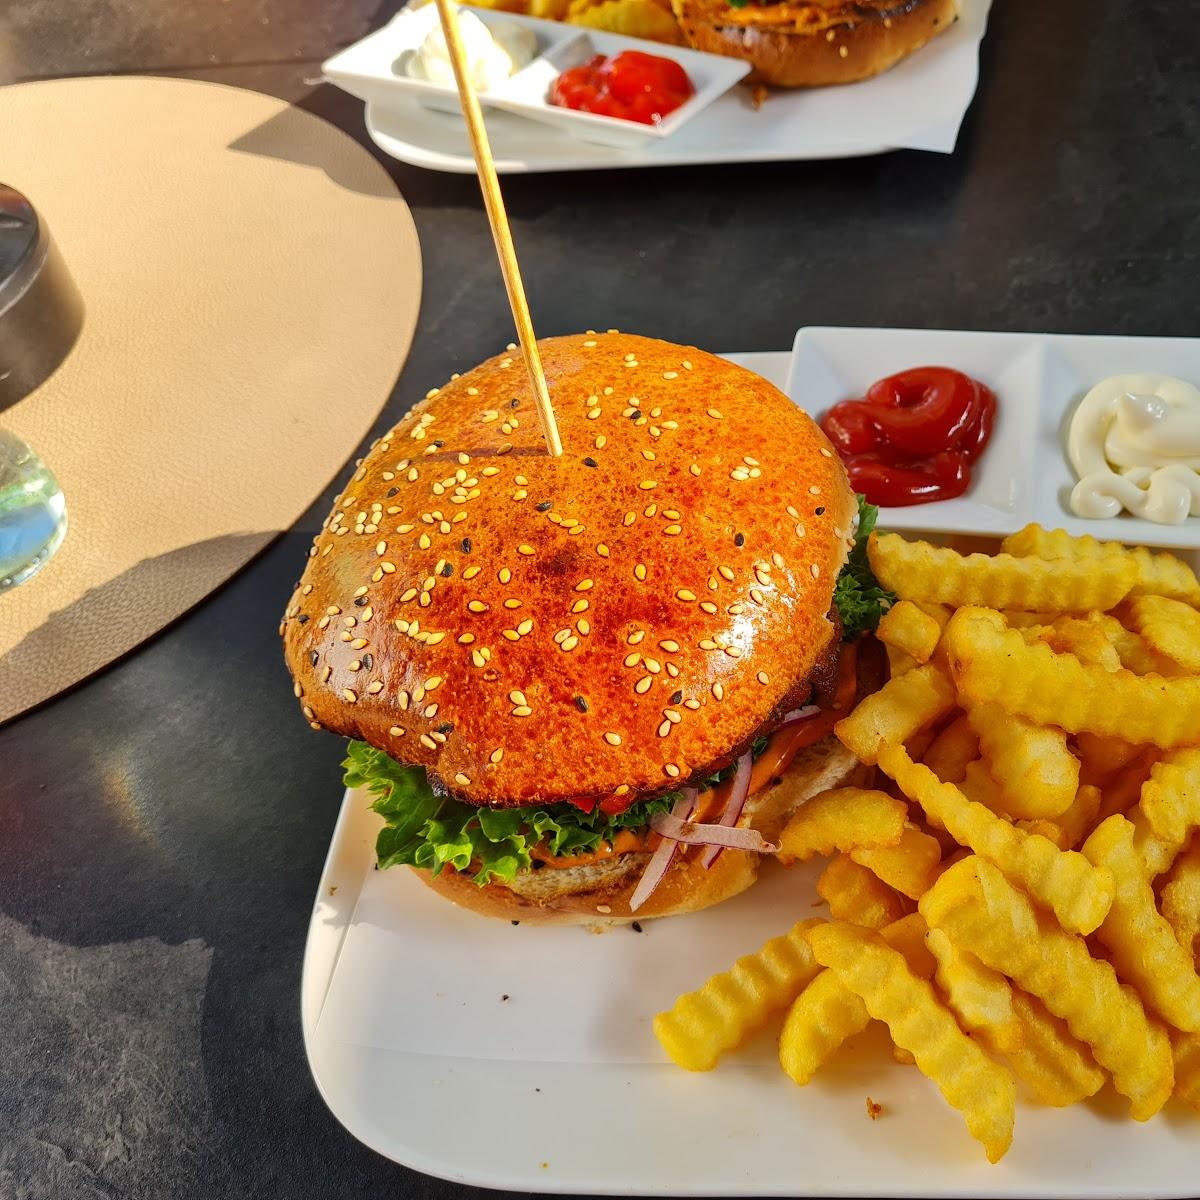 Restaurant "Burgerhaus Laila" in Berlin